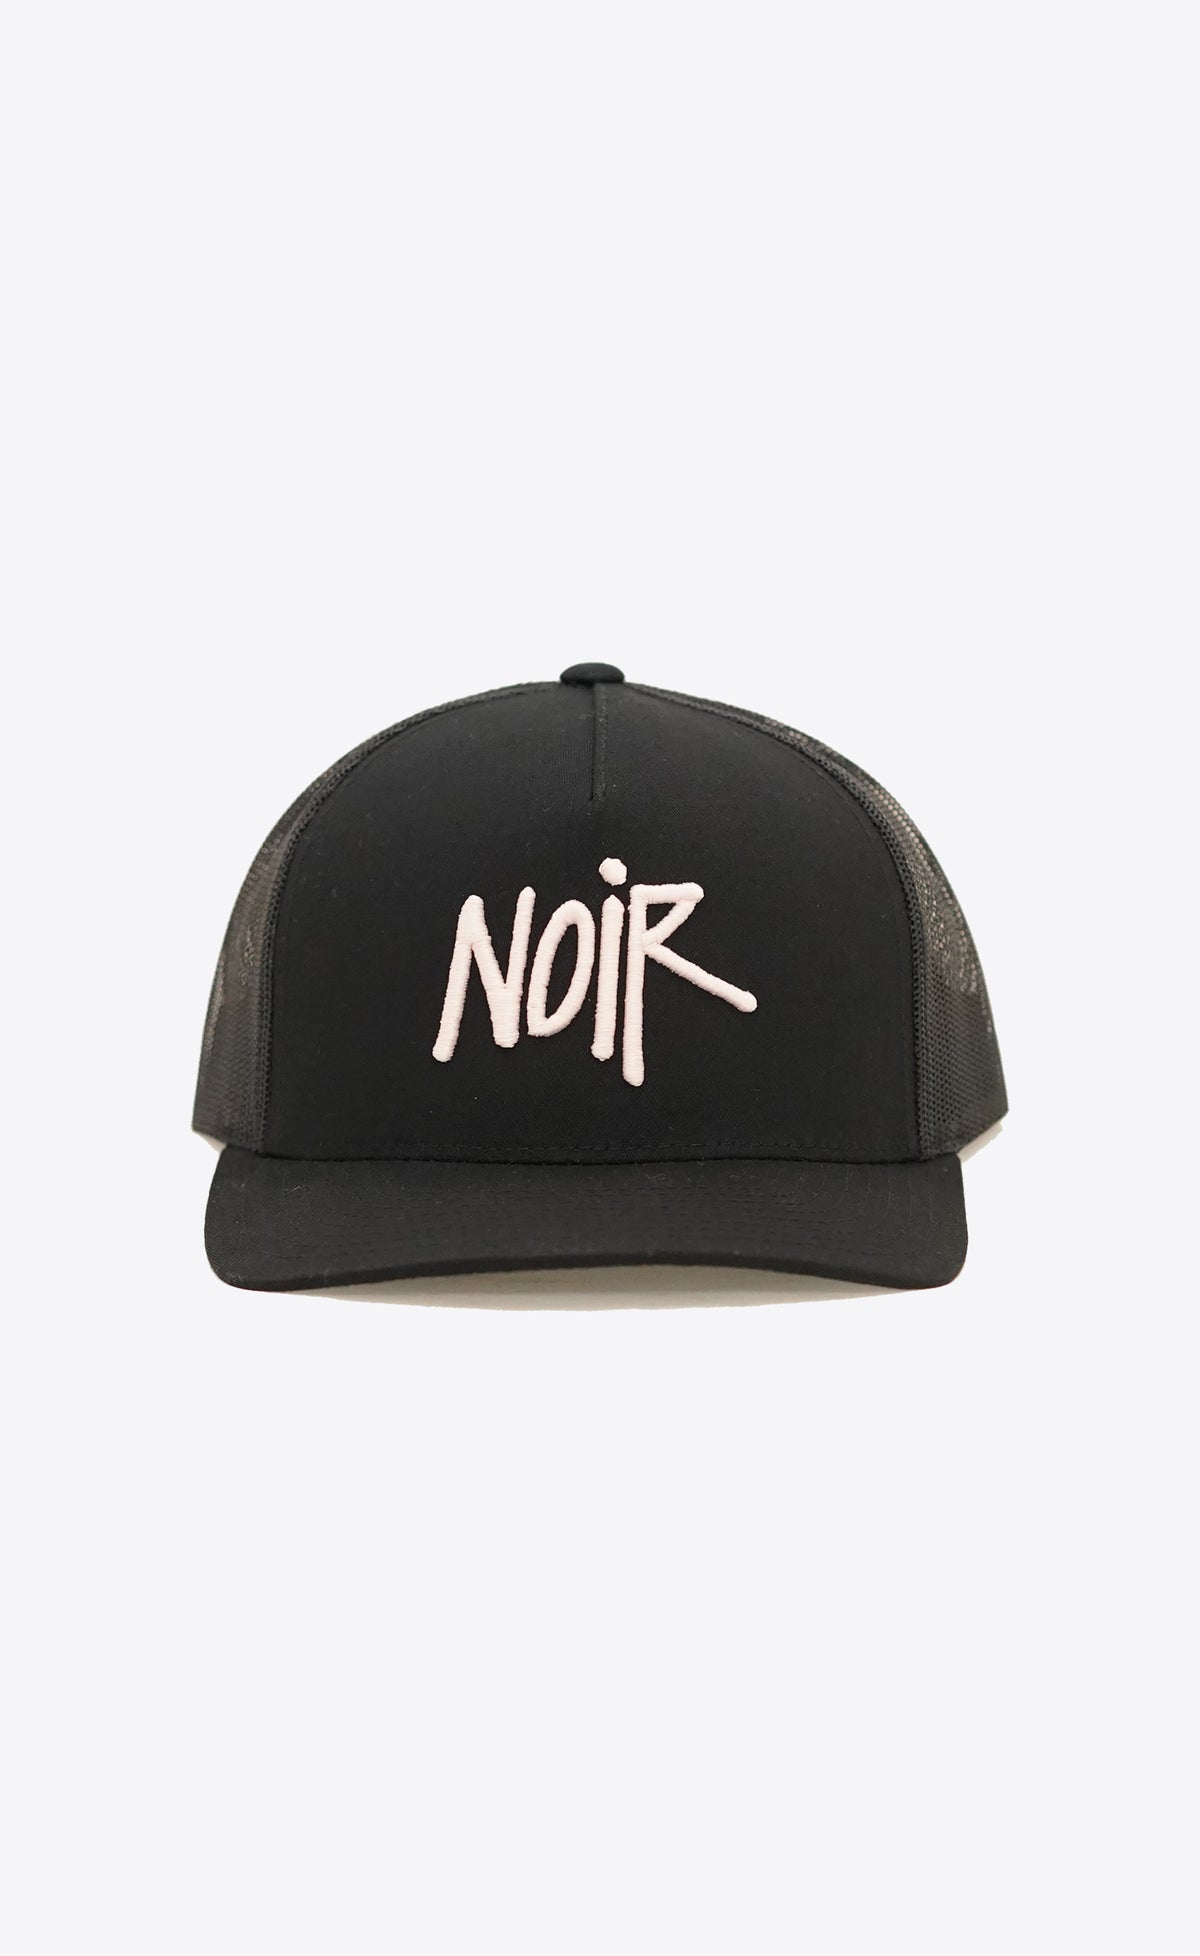 Noir Graffiti Trucker Hat